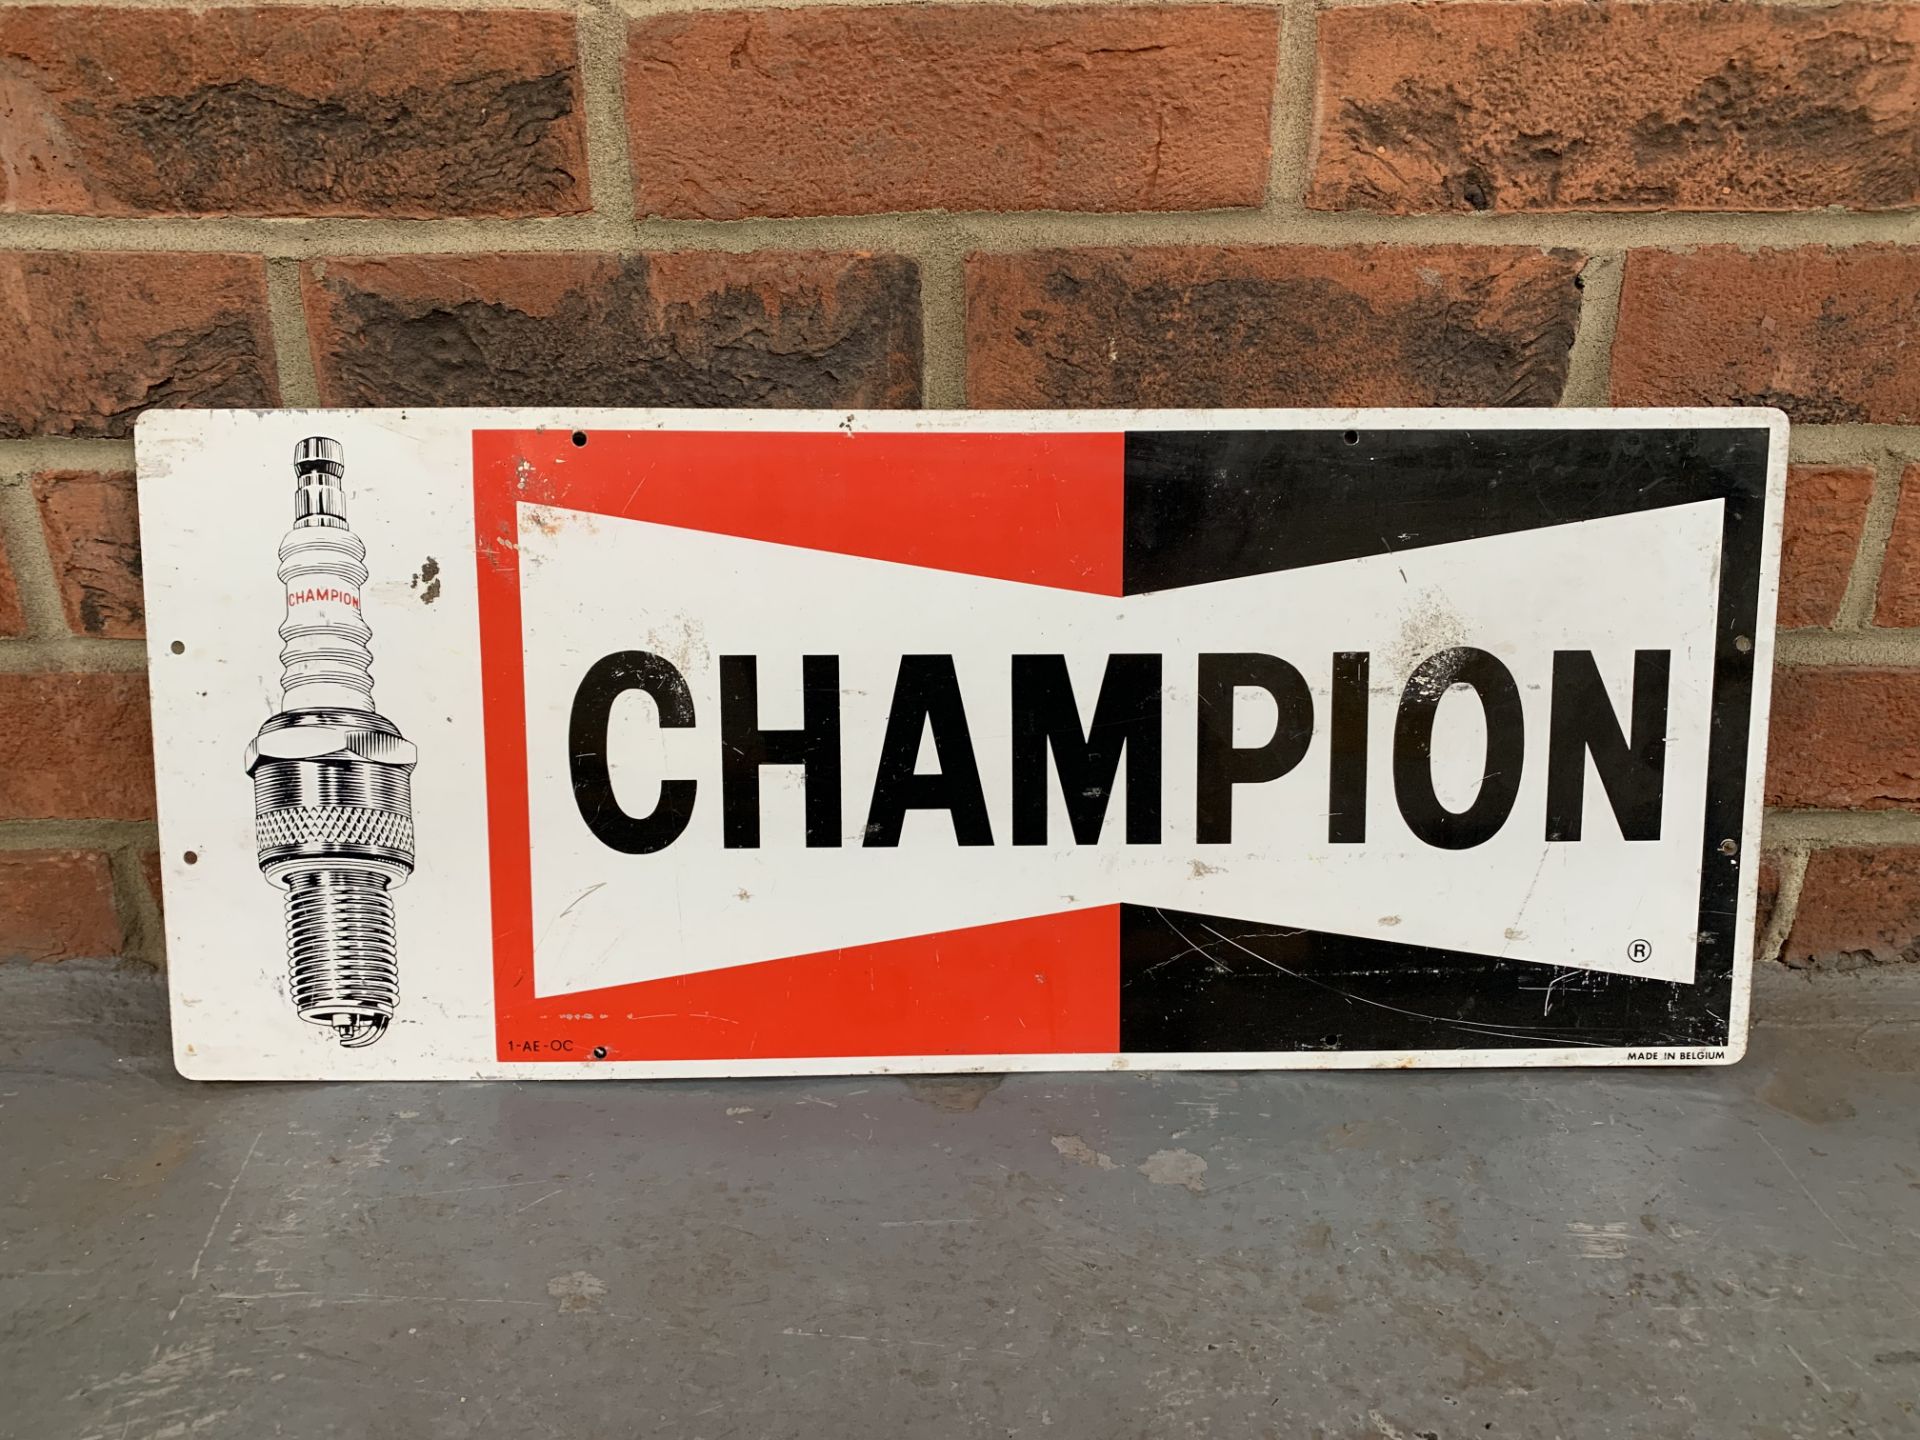 Original Champion Spark Plugs Tin Sign